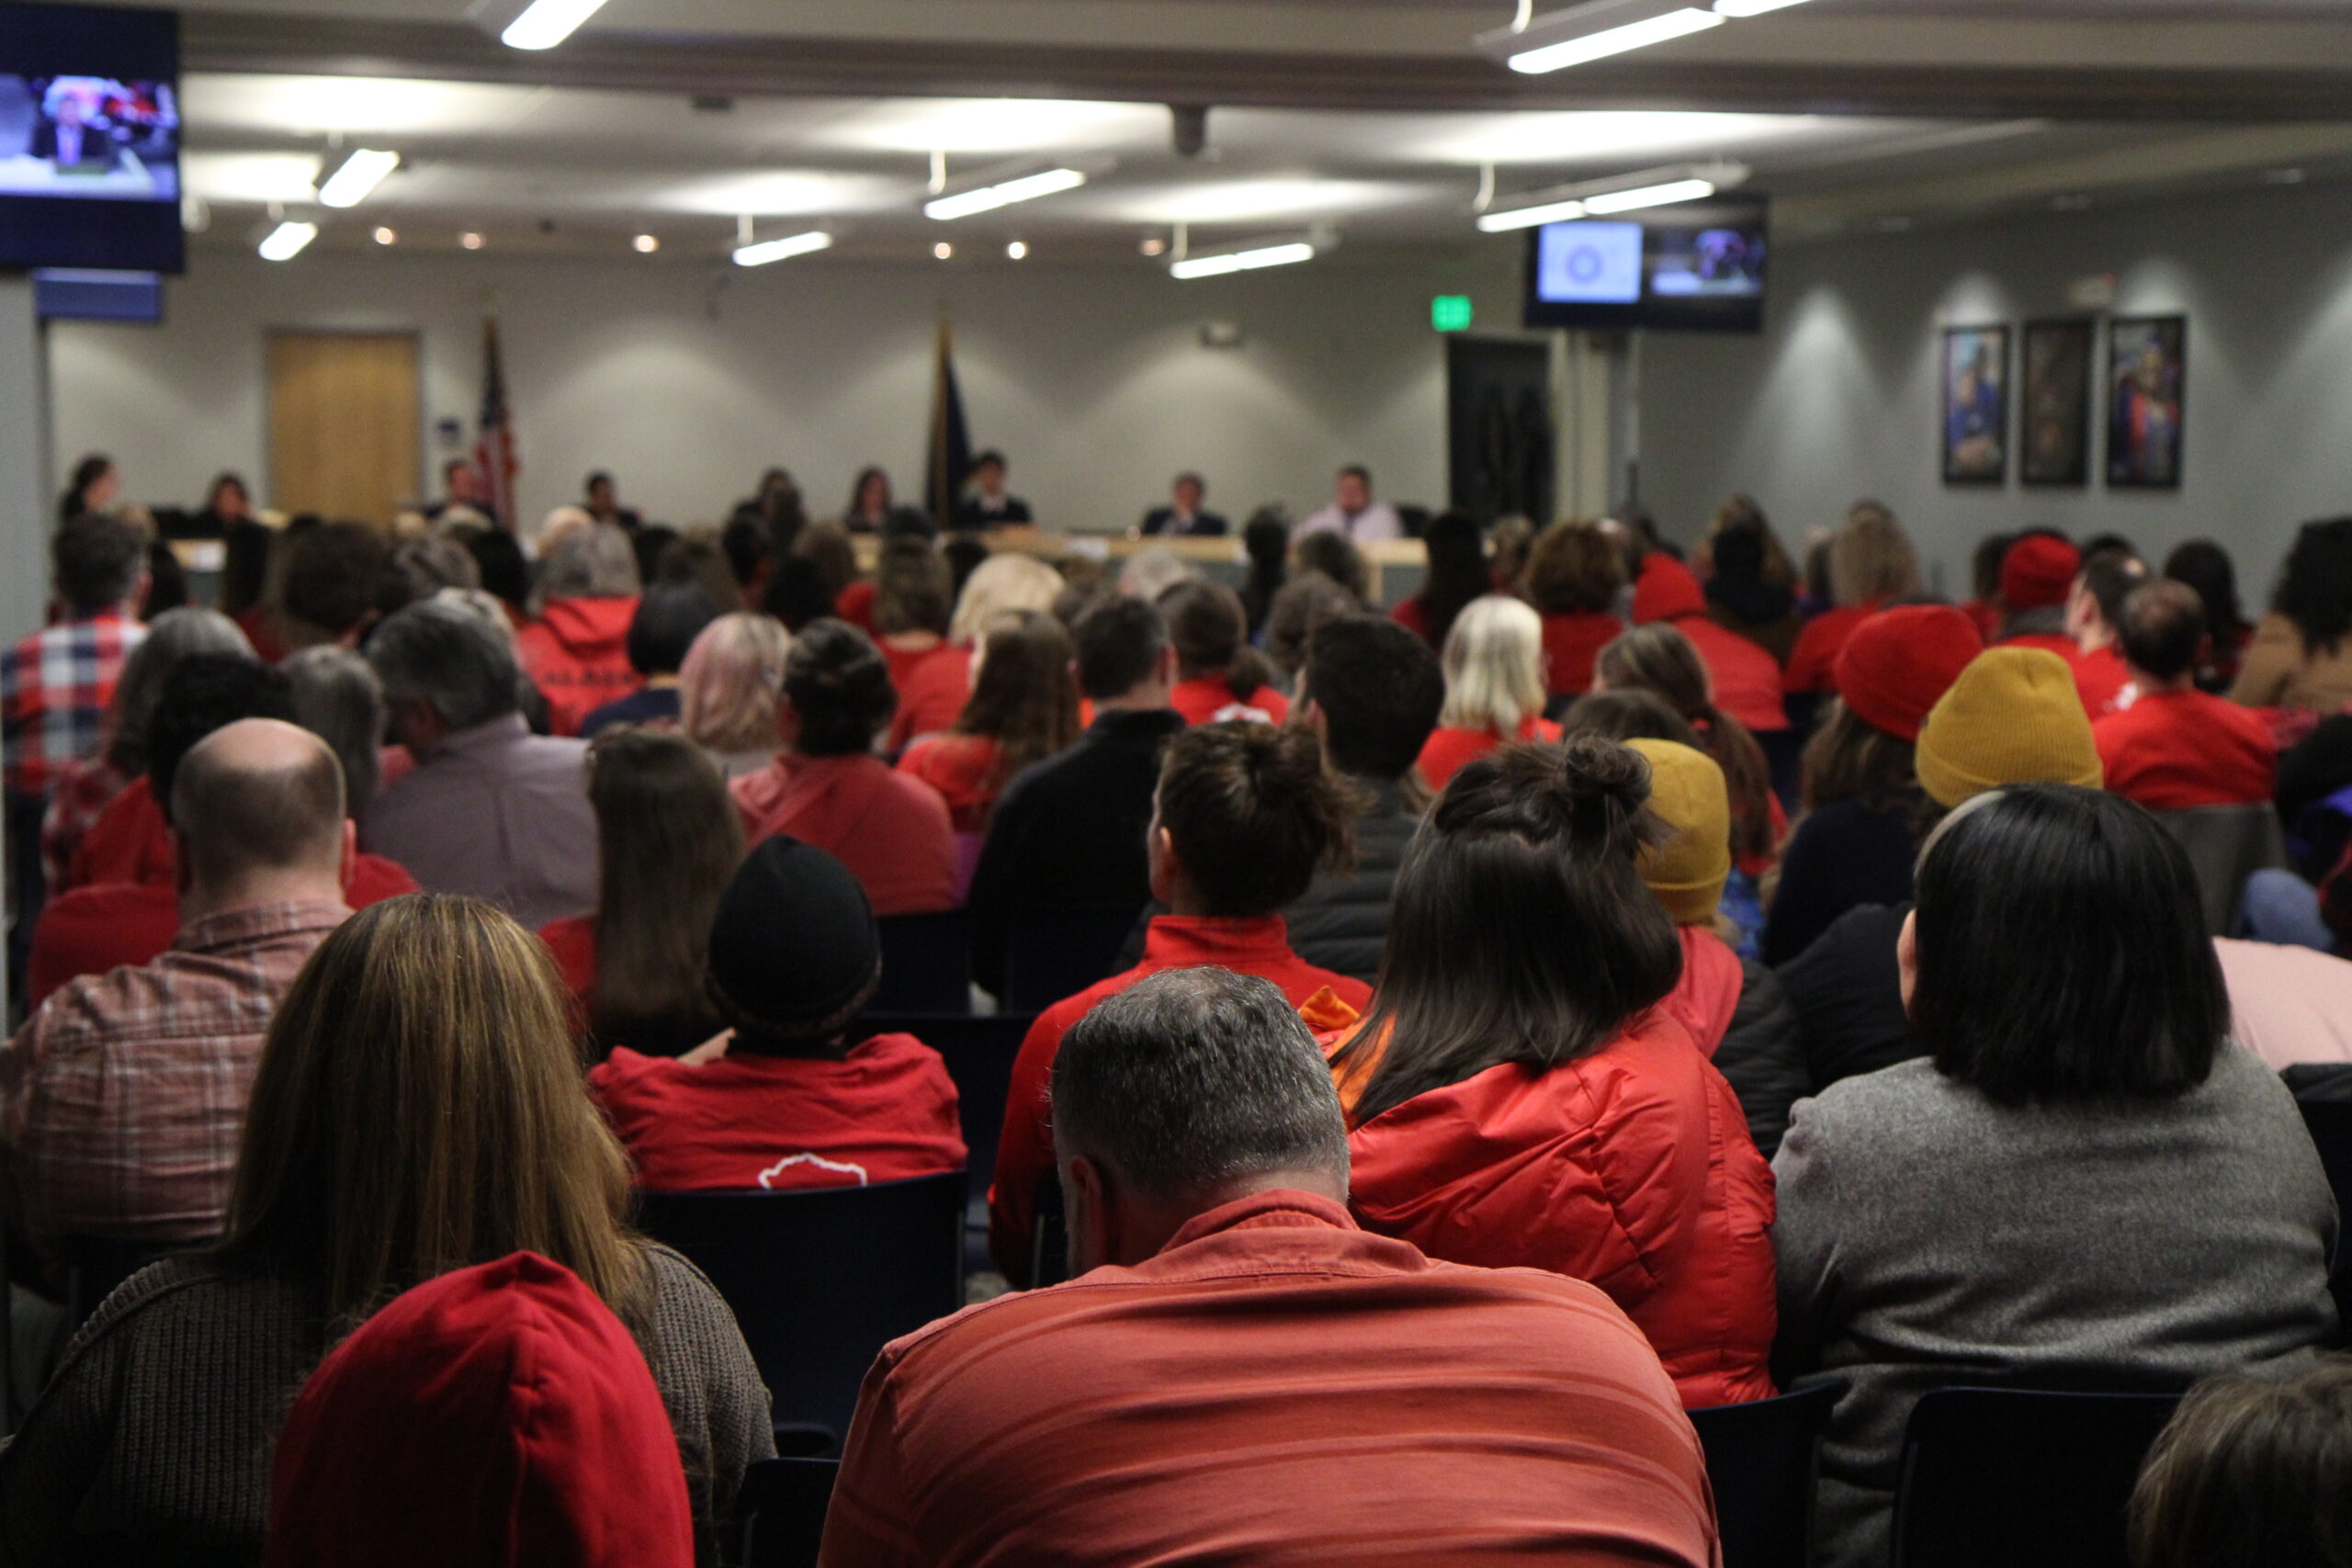 People dressed in red watch a school board meeting.